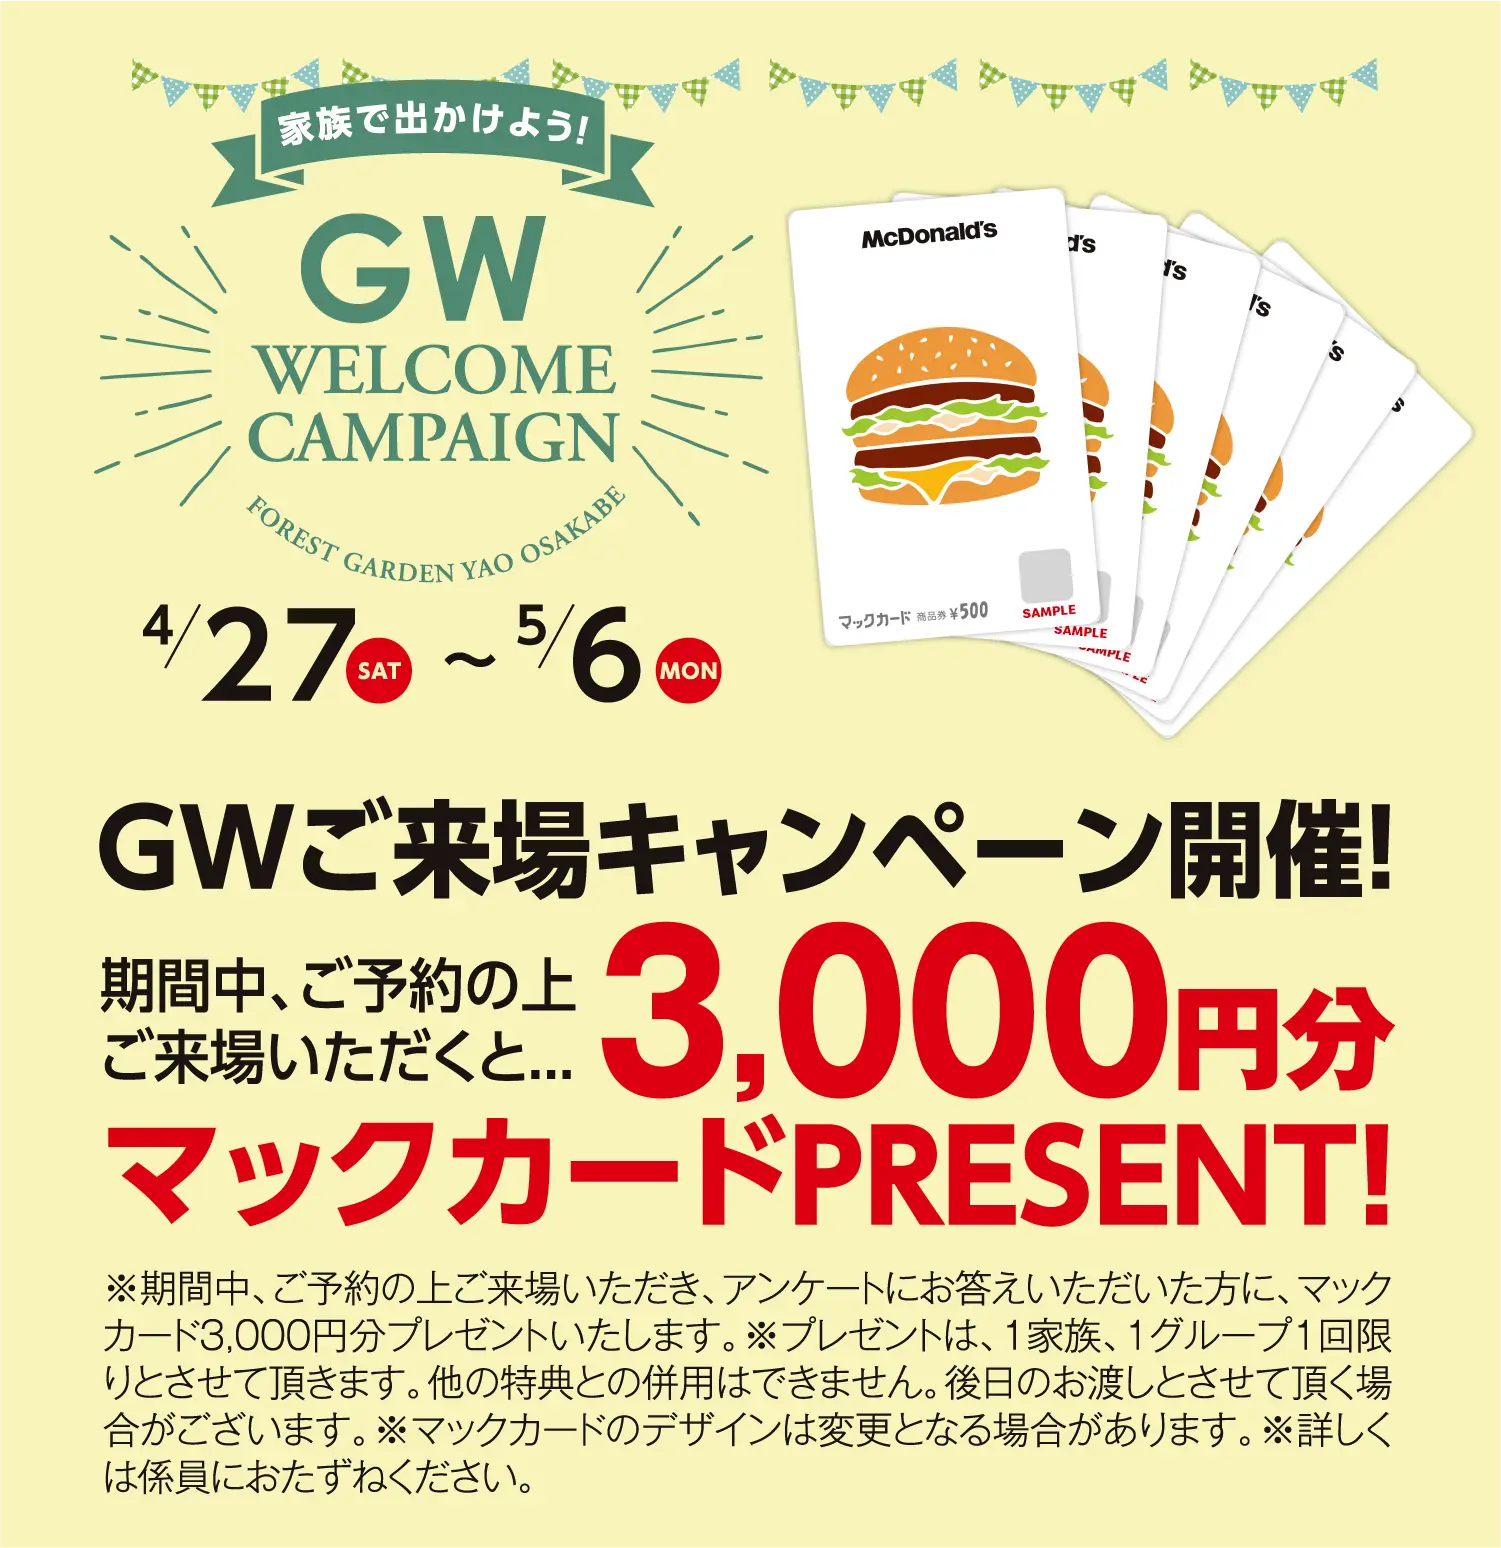 GWご来場キャンペーン開催!期間中、ご予約の上ご来場いただくと...3,000円分マックカードPRESENT!